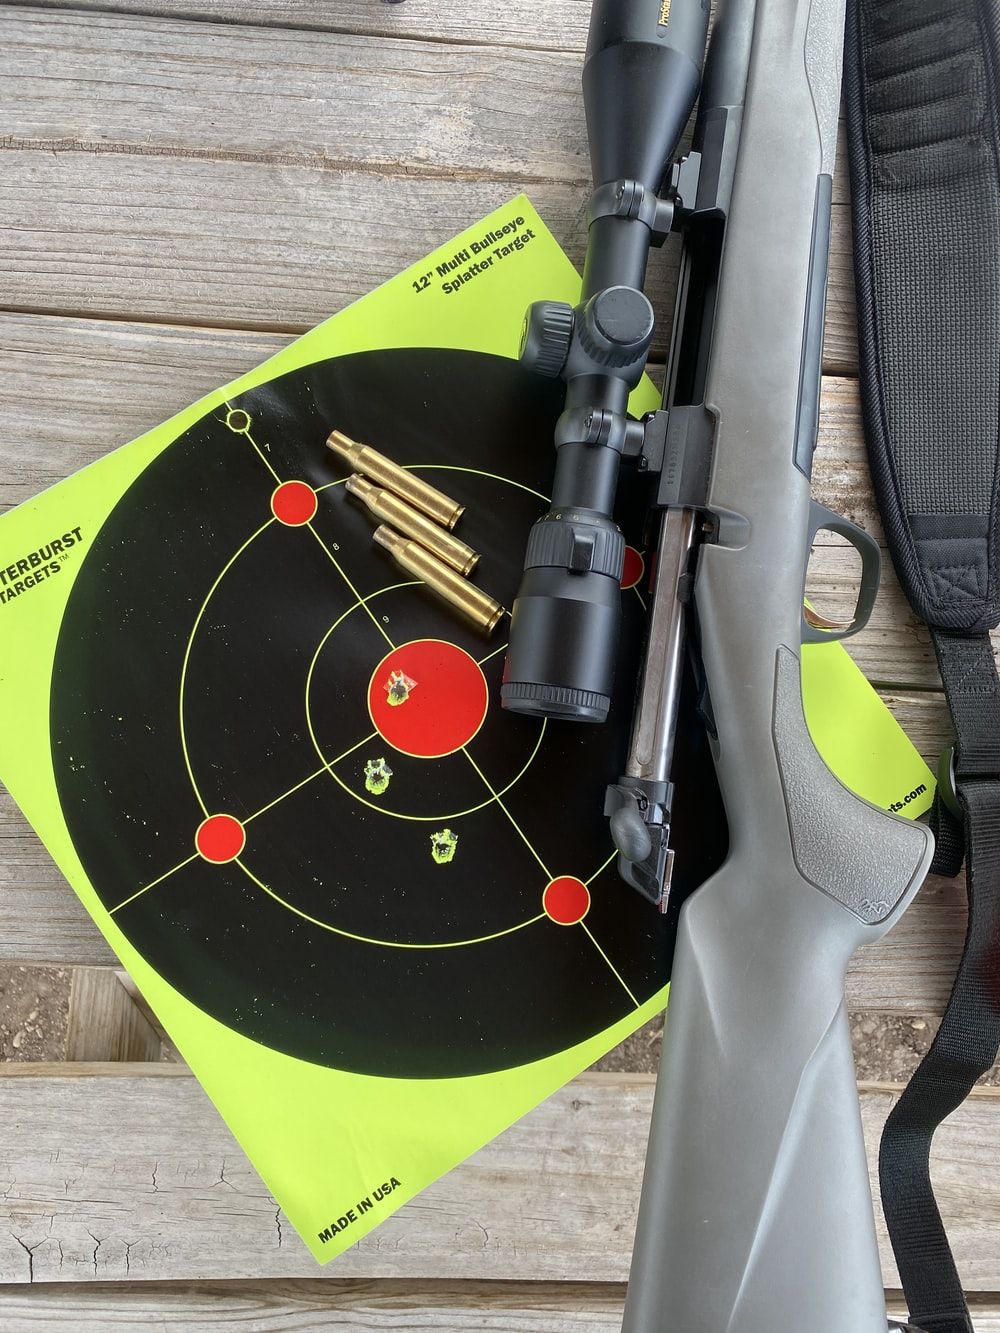 Shooting Range Picture. Download Free Image